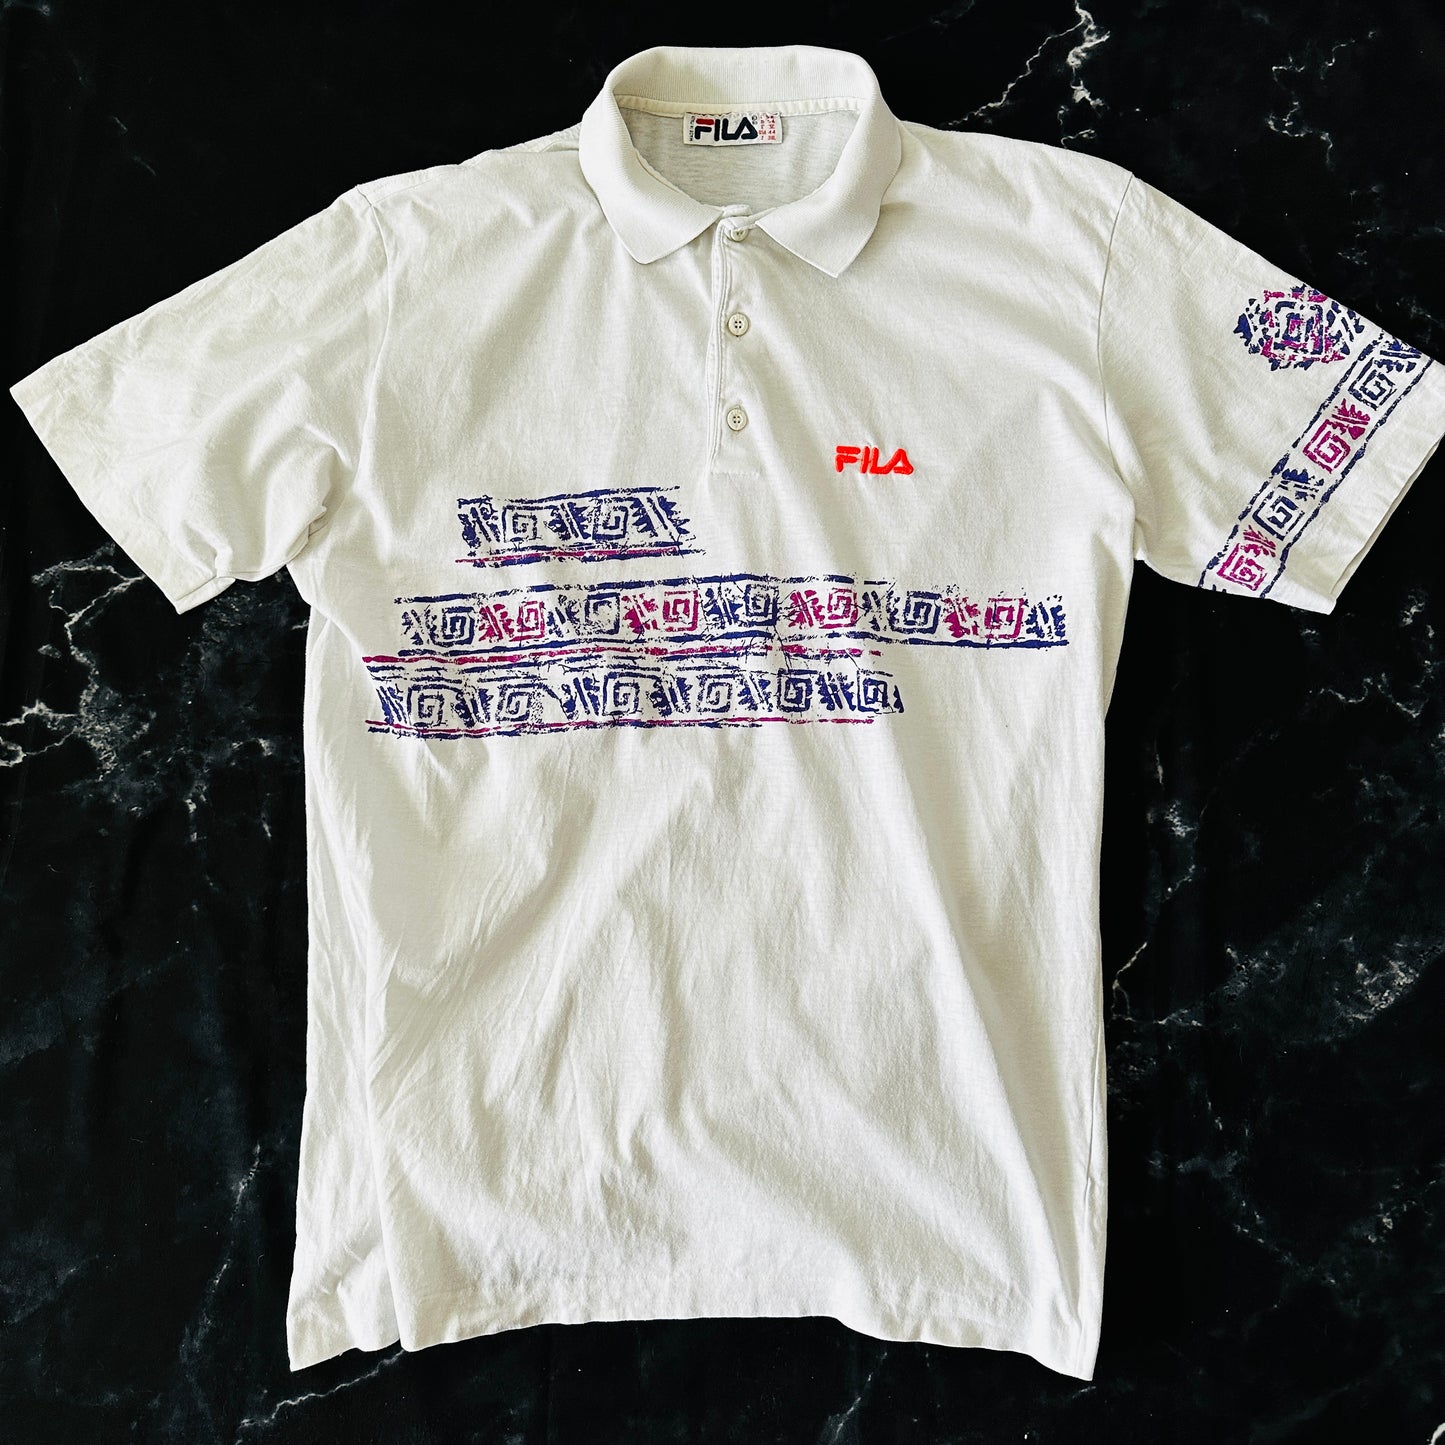 Fila Vintage 80s Tennis Polo Shirt - 54 / XL - Made in Italy